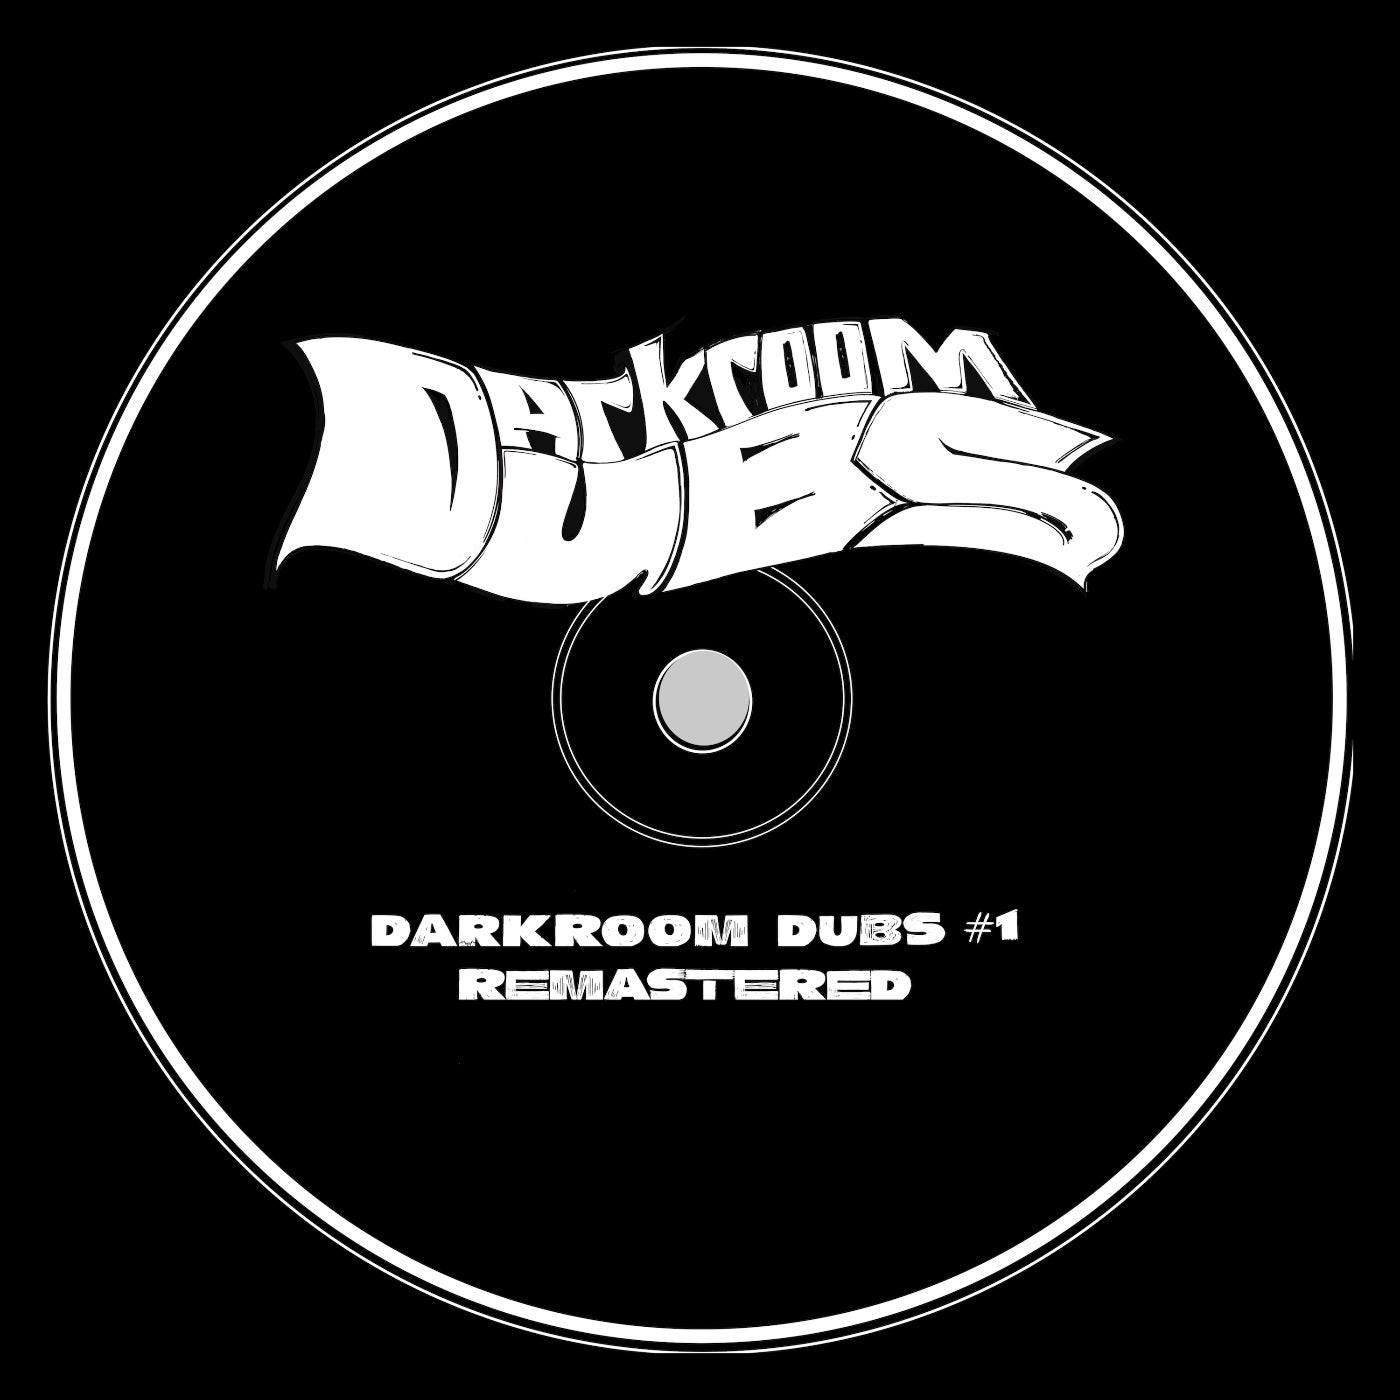 Download Darkroom Dubs #1 - Remastered on Electrobuzz